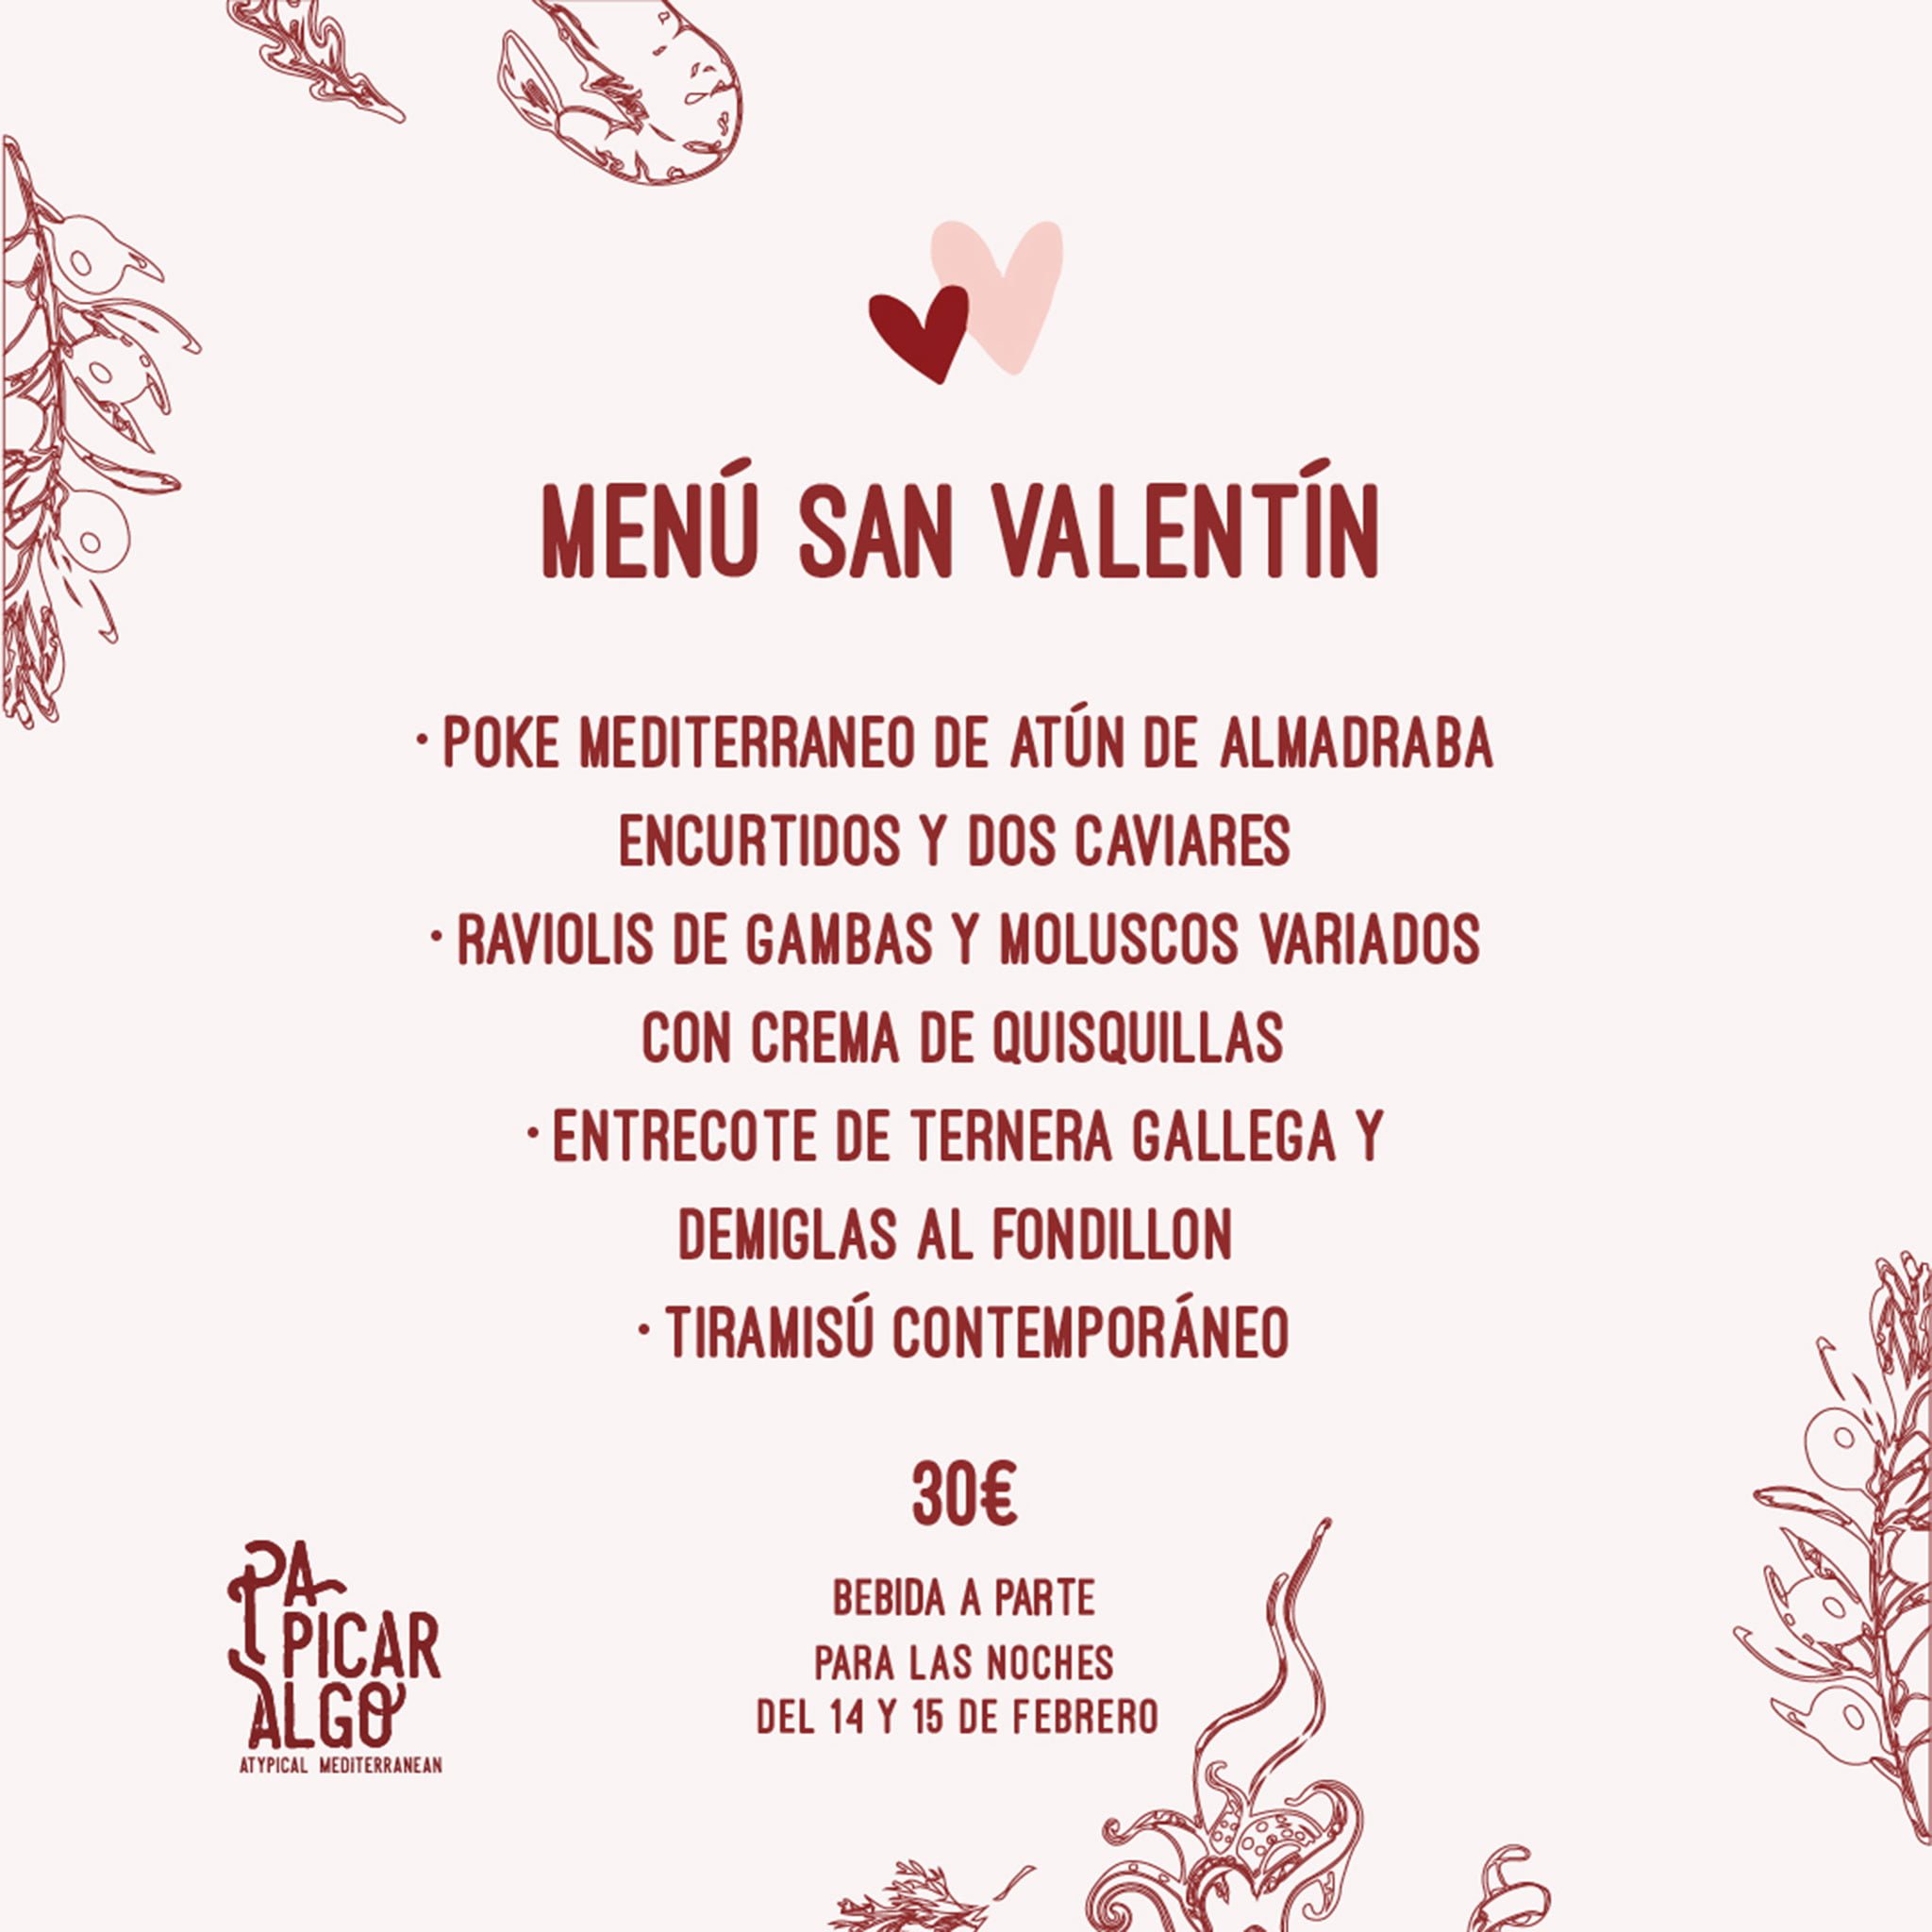 Menú de San Valentín en Dénia – Pa Picar Algo